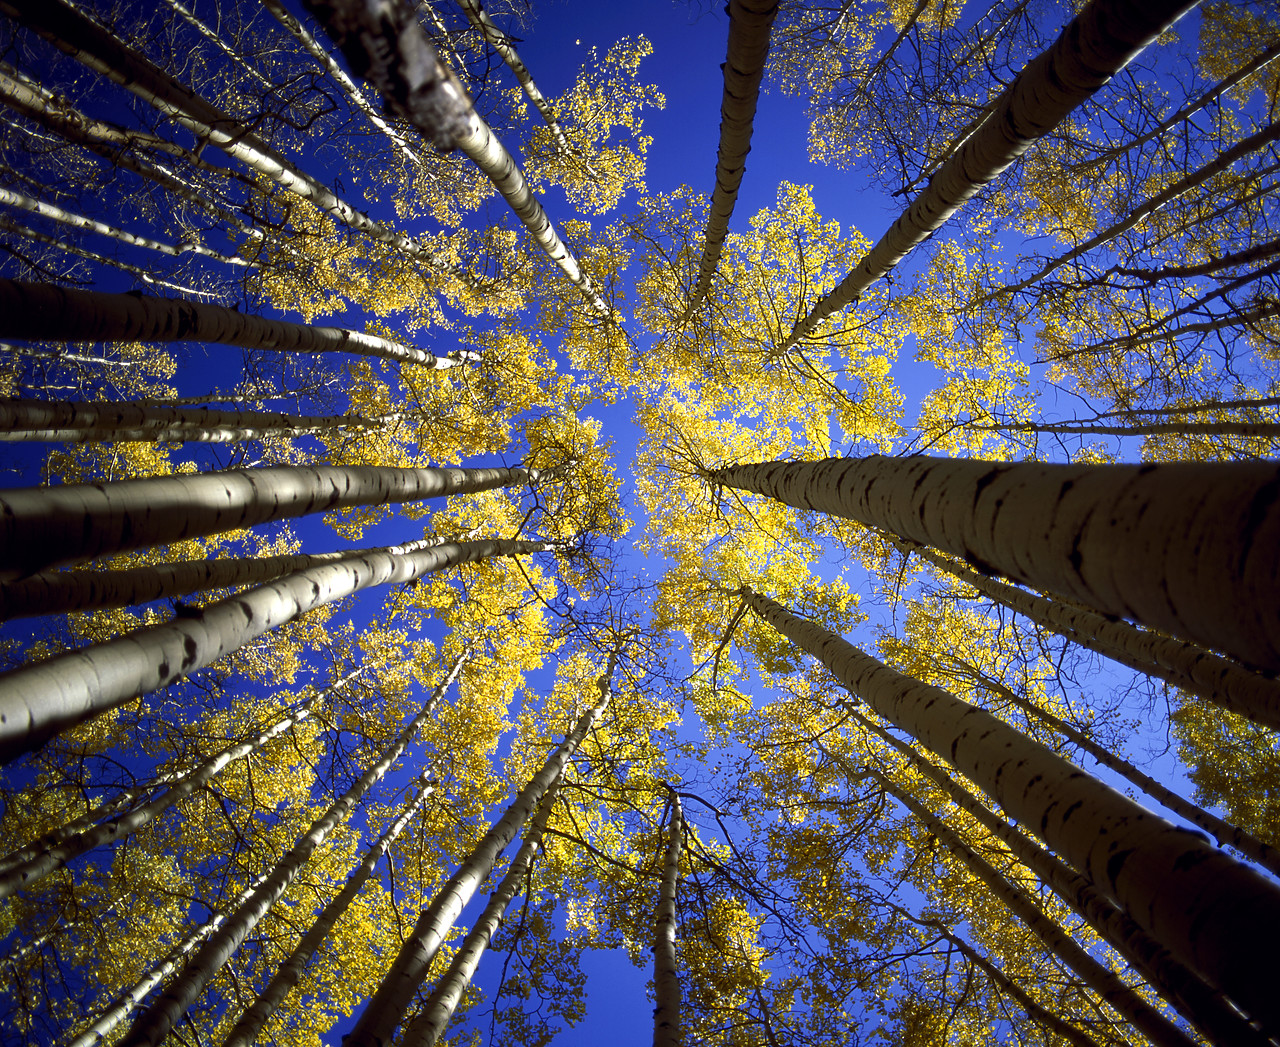 #990619-1 - Towering Aspen Trees, Colorado, USA